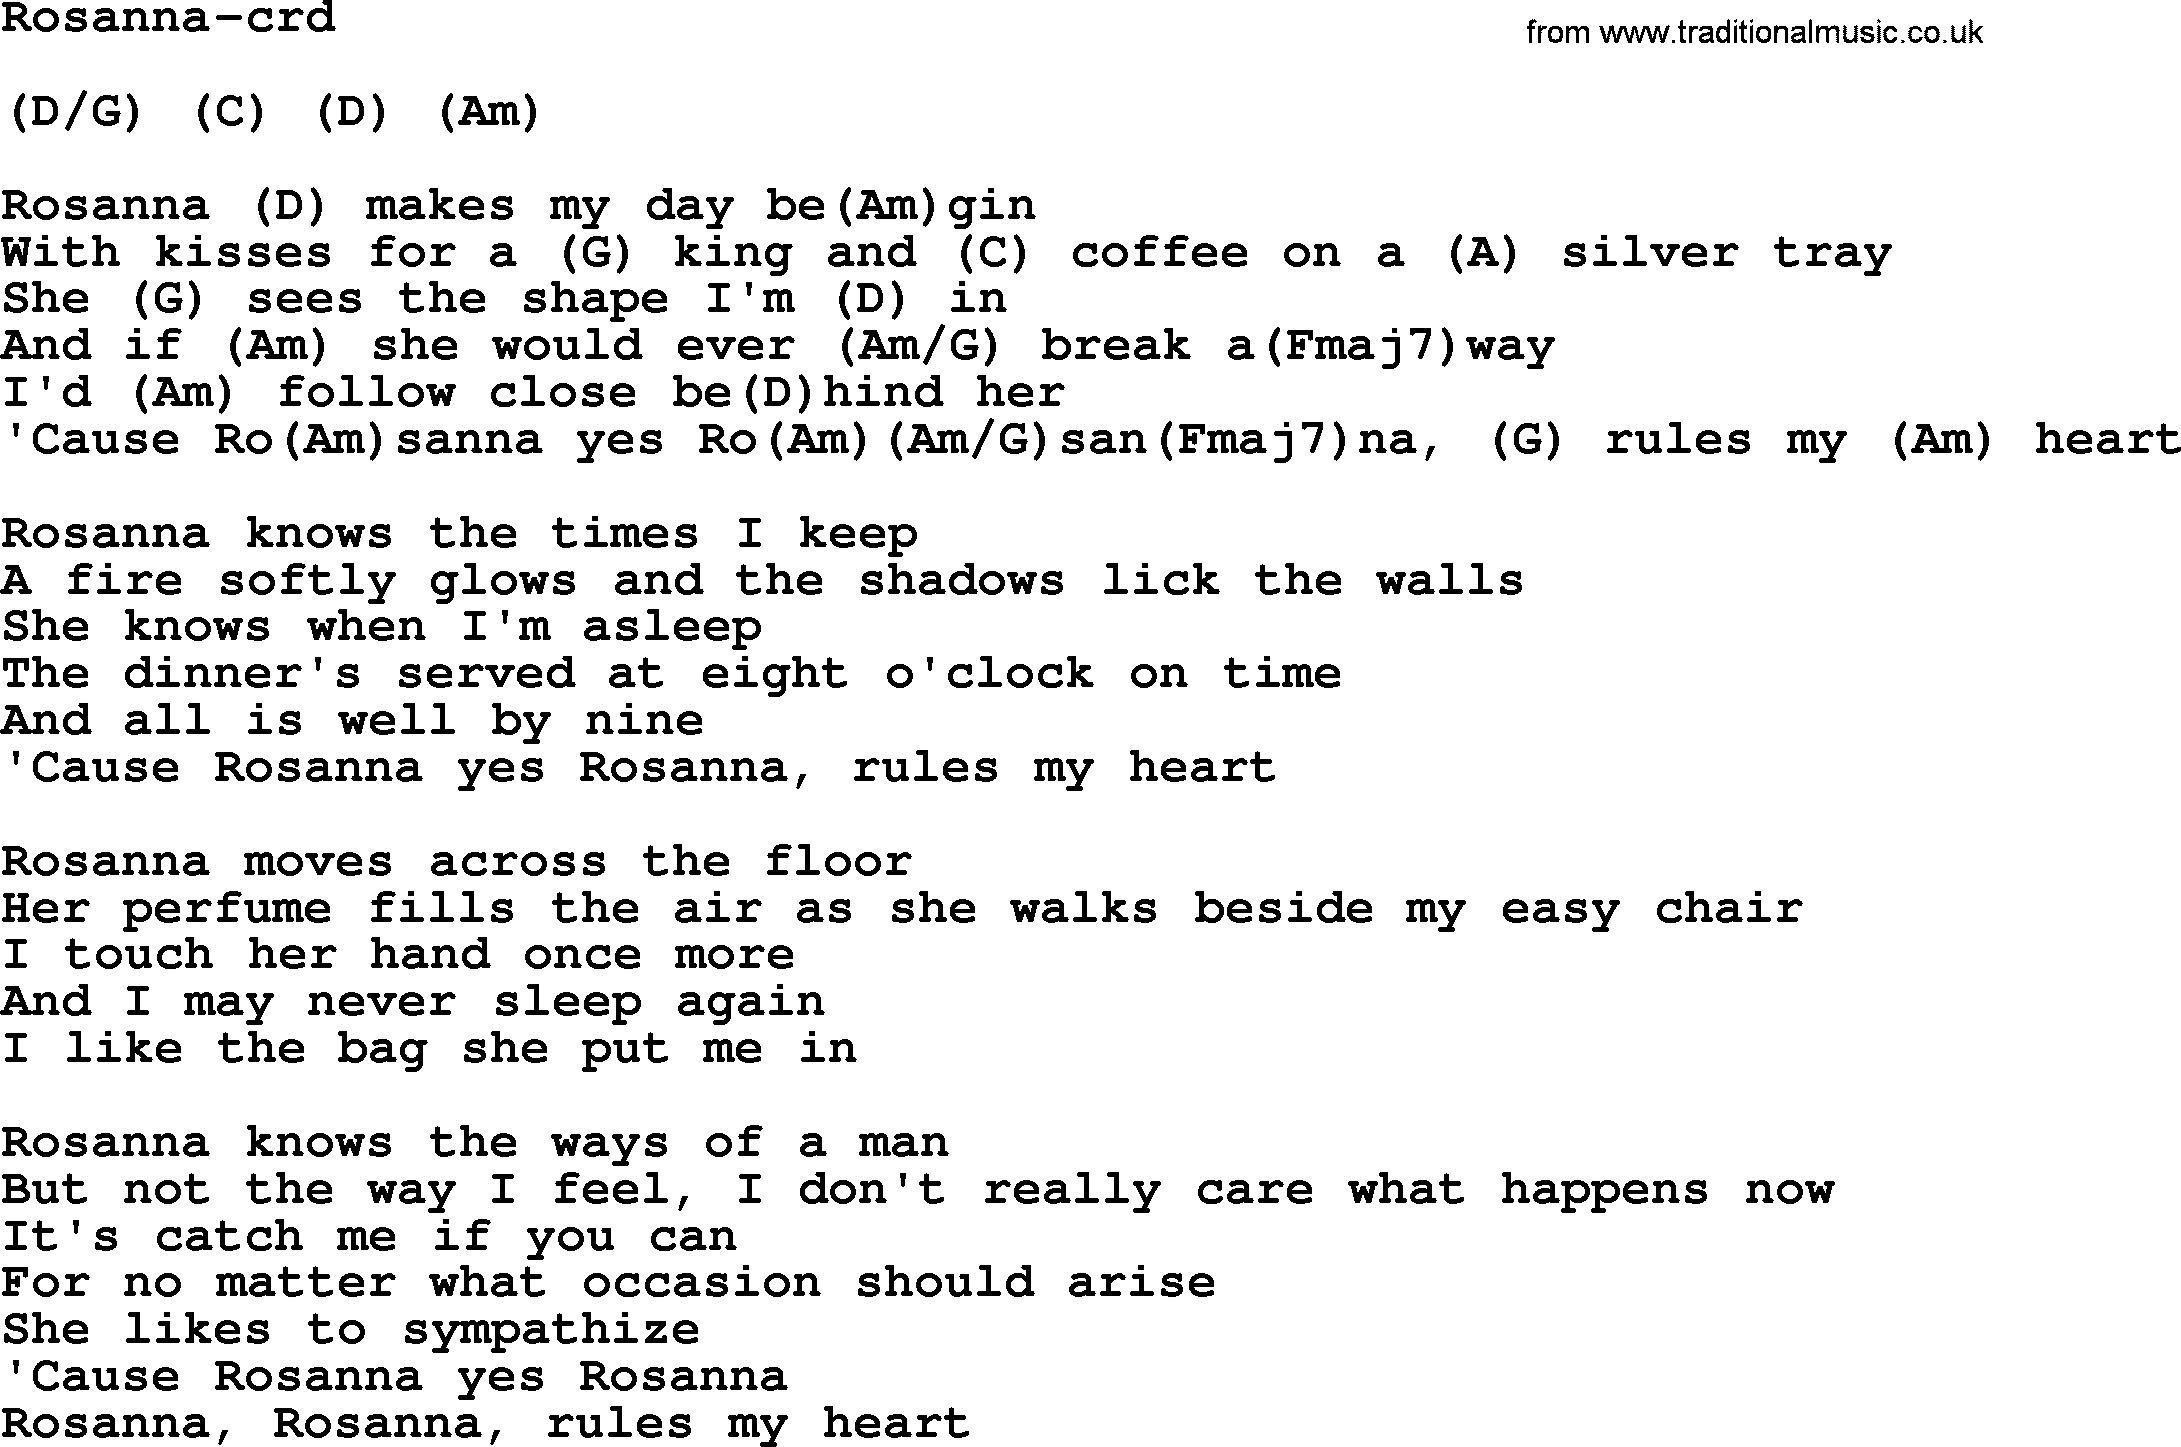 Gordon Lightfoot song Rosanna, lyrics and chords